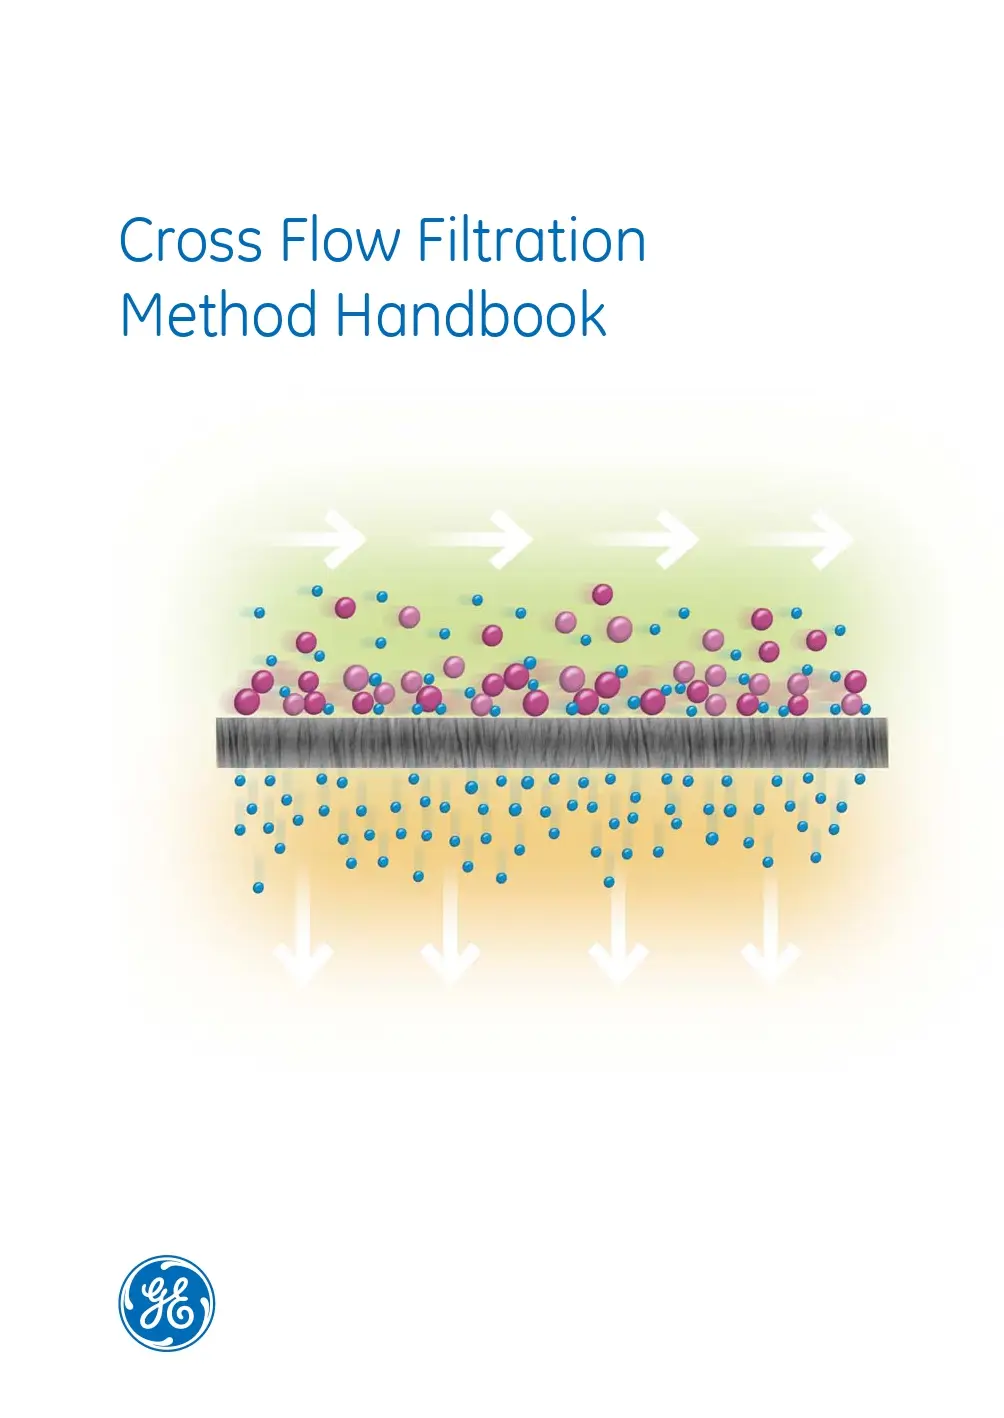 Cross Flow Filtration Method Handbook